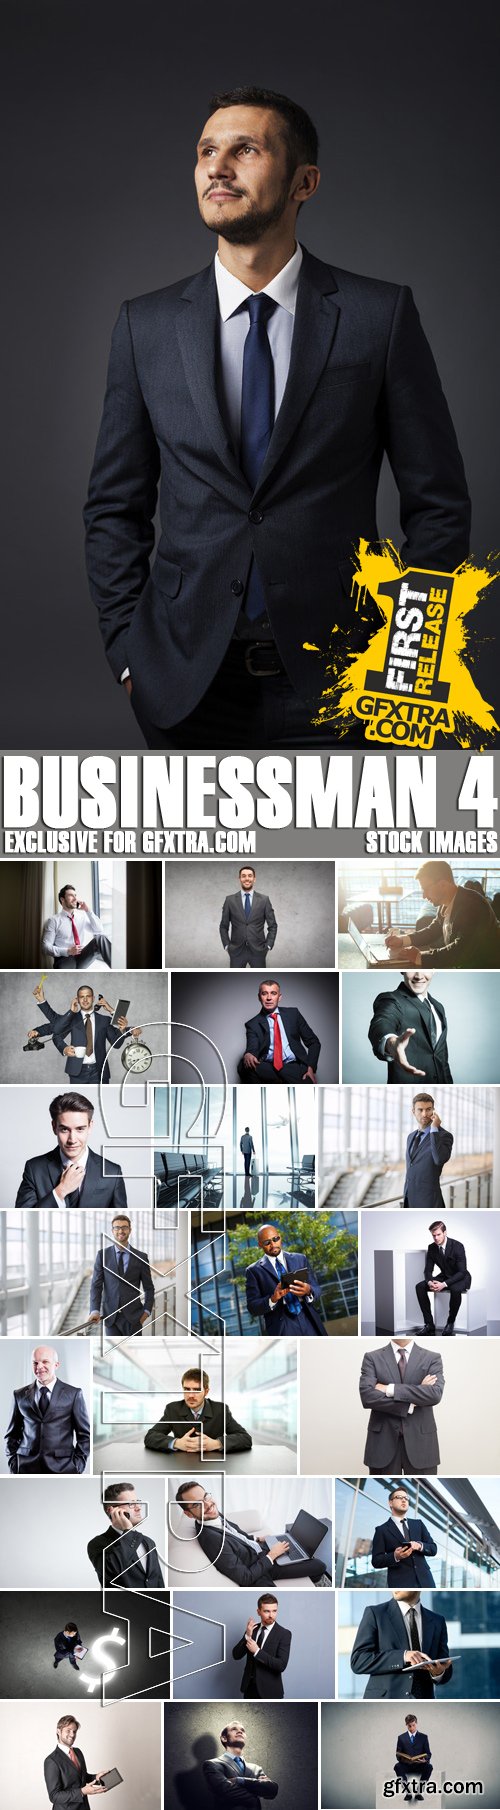 Stock Photos - Businessman 4, 25xJPG